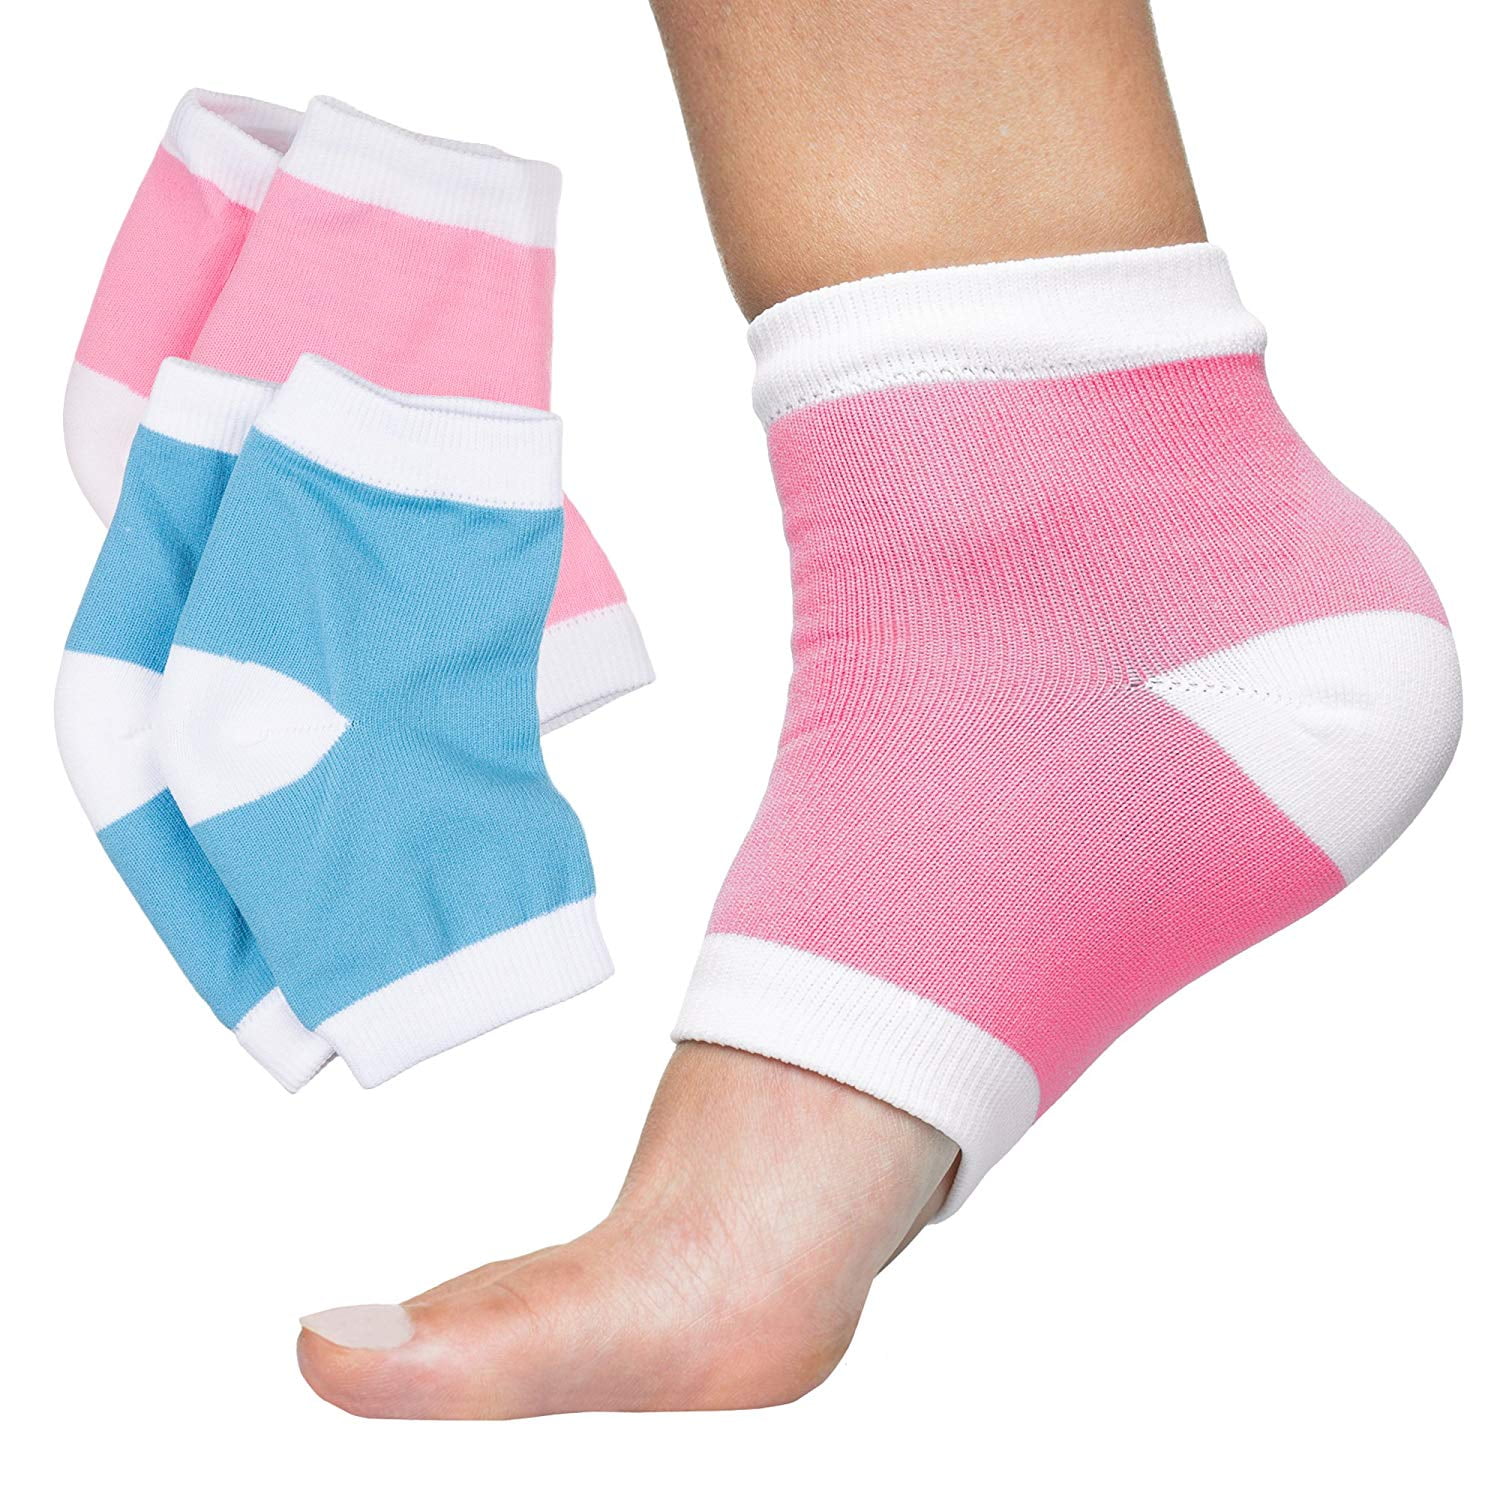 10 x Girls Kids Pink Heal Heel and Toe Cotton Rich Socks